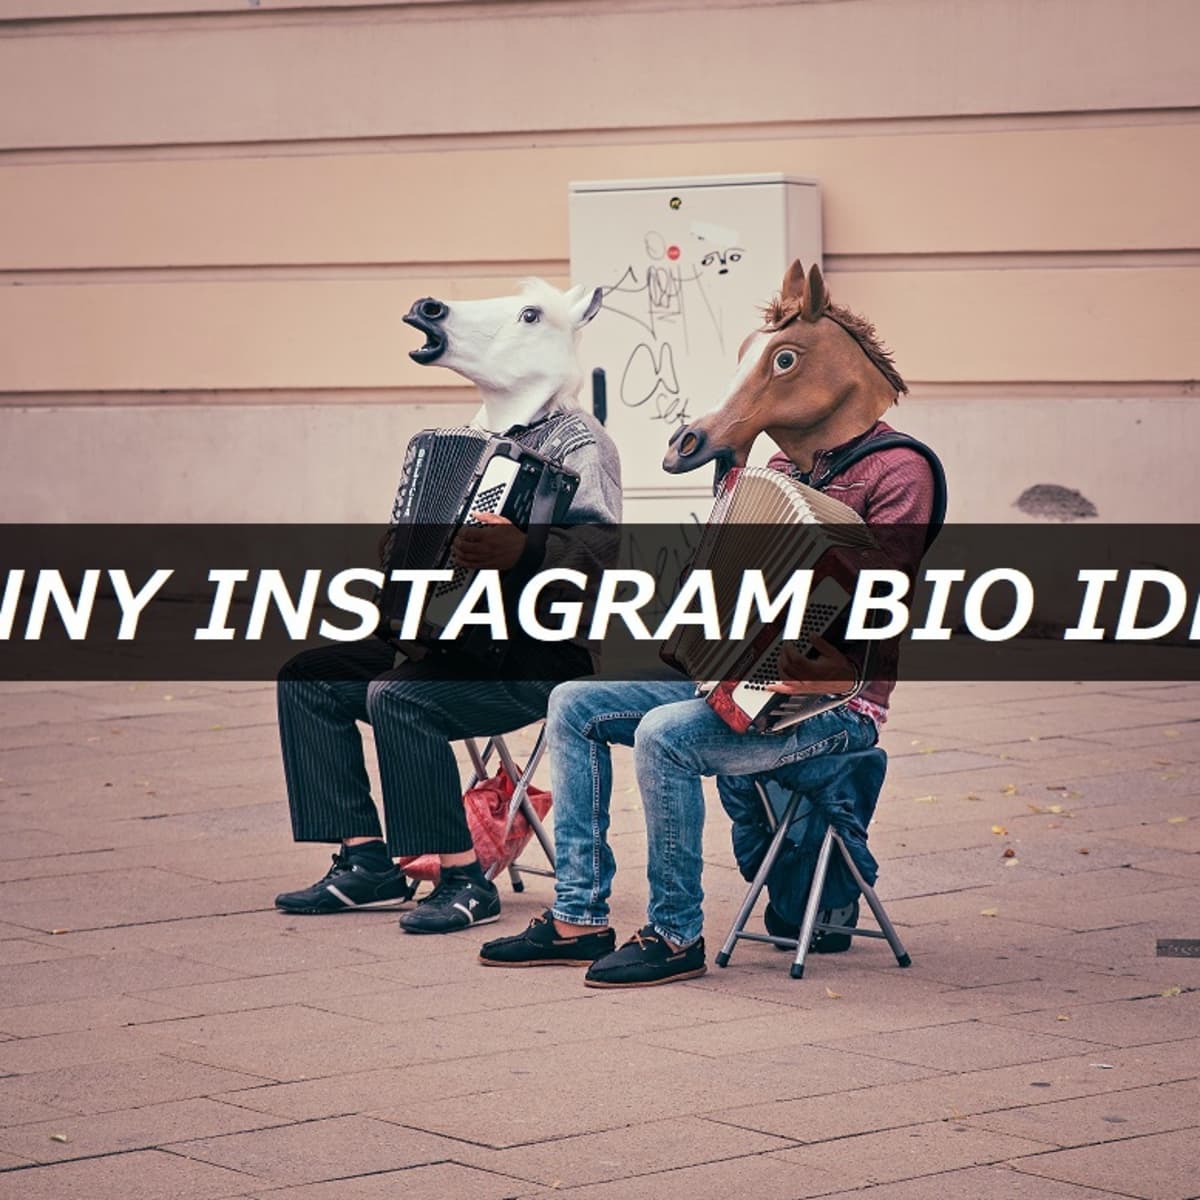 150+ Funny Instagram Bio Ideas - TurboFuture